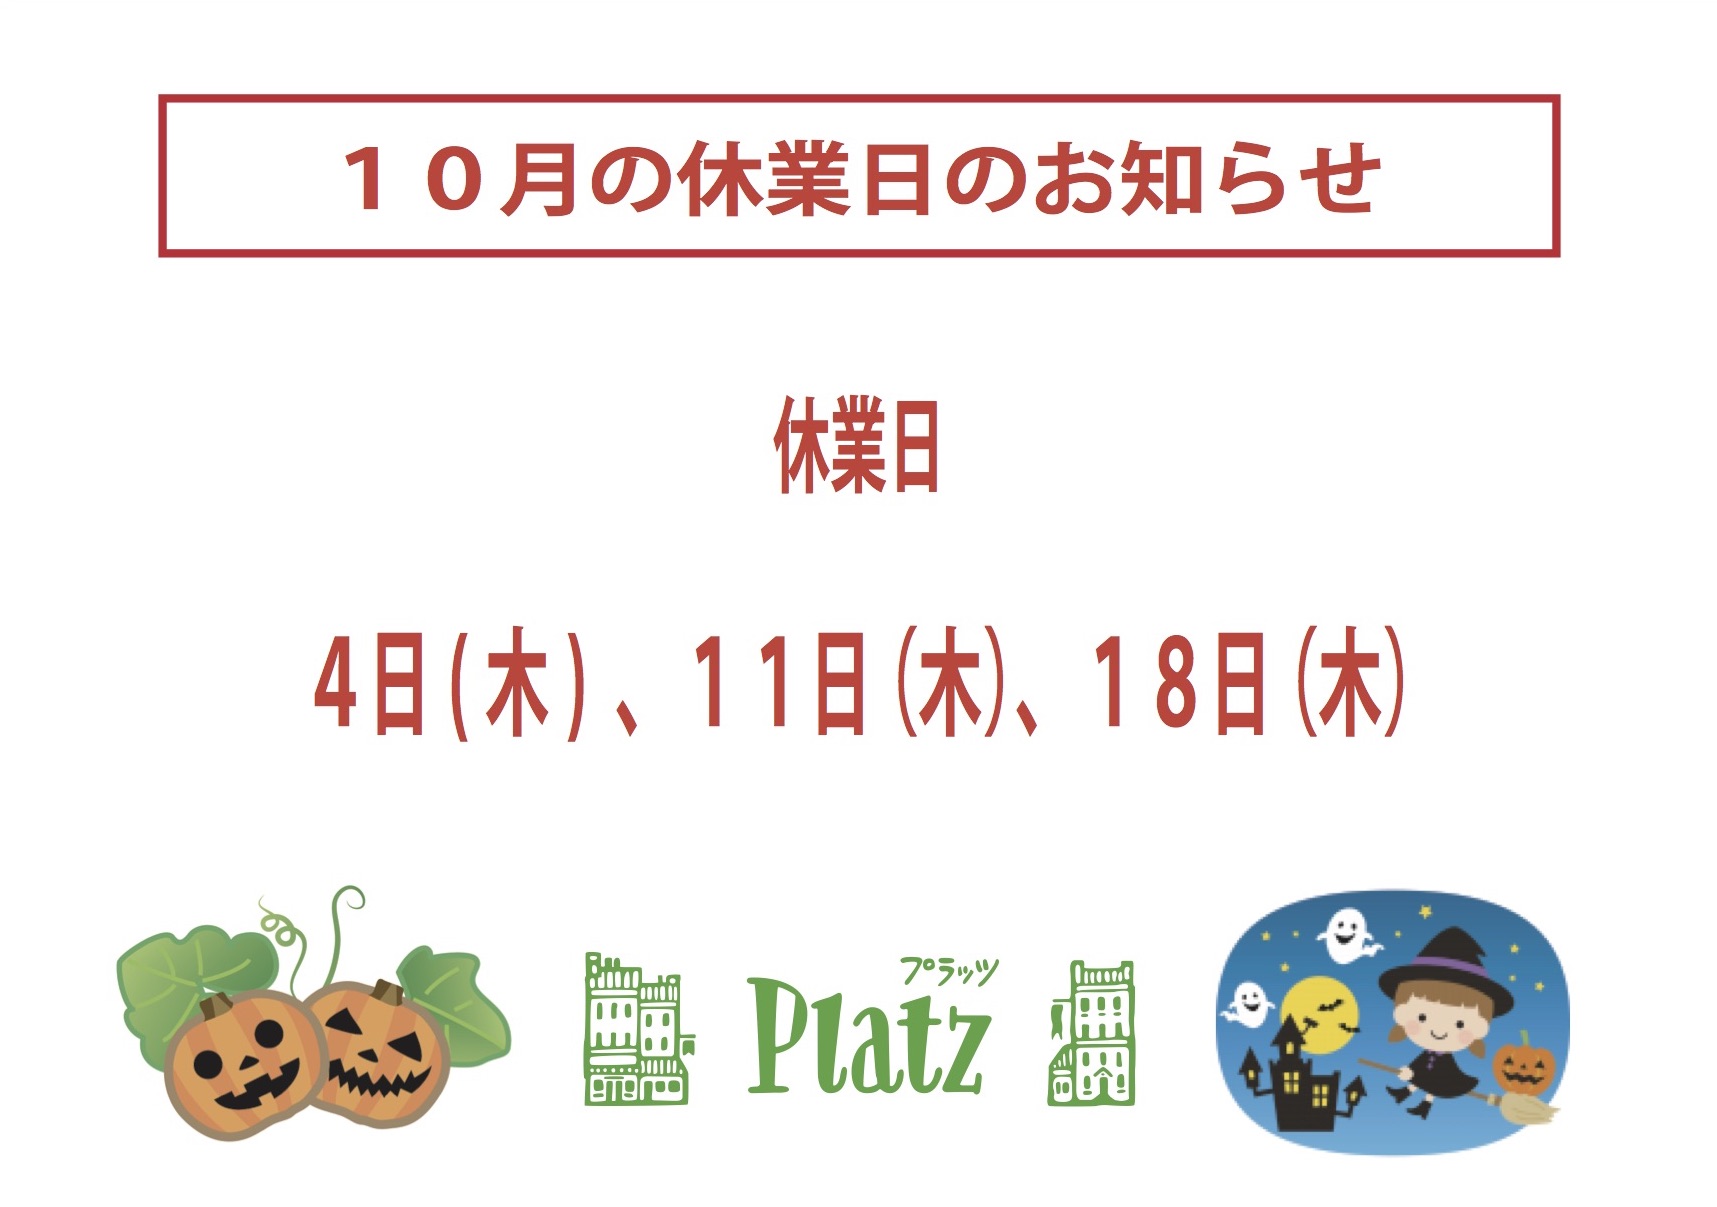 http://www.kyoto-platz.jp/news/images/2018.10%E6%9C%88%E4%BC%91%E6%A5%AD%E6%97%A5%E3%81%AE%E3%82%B3%E3%83%94%E3%83%BC.jpg